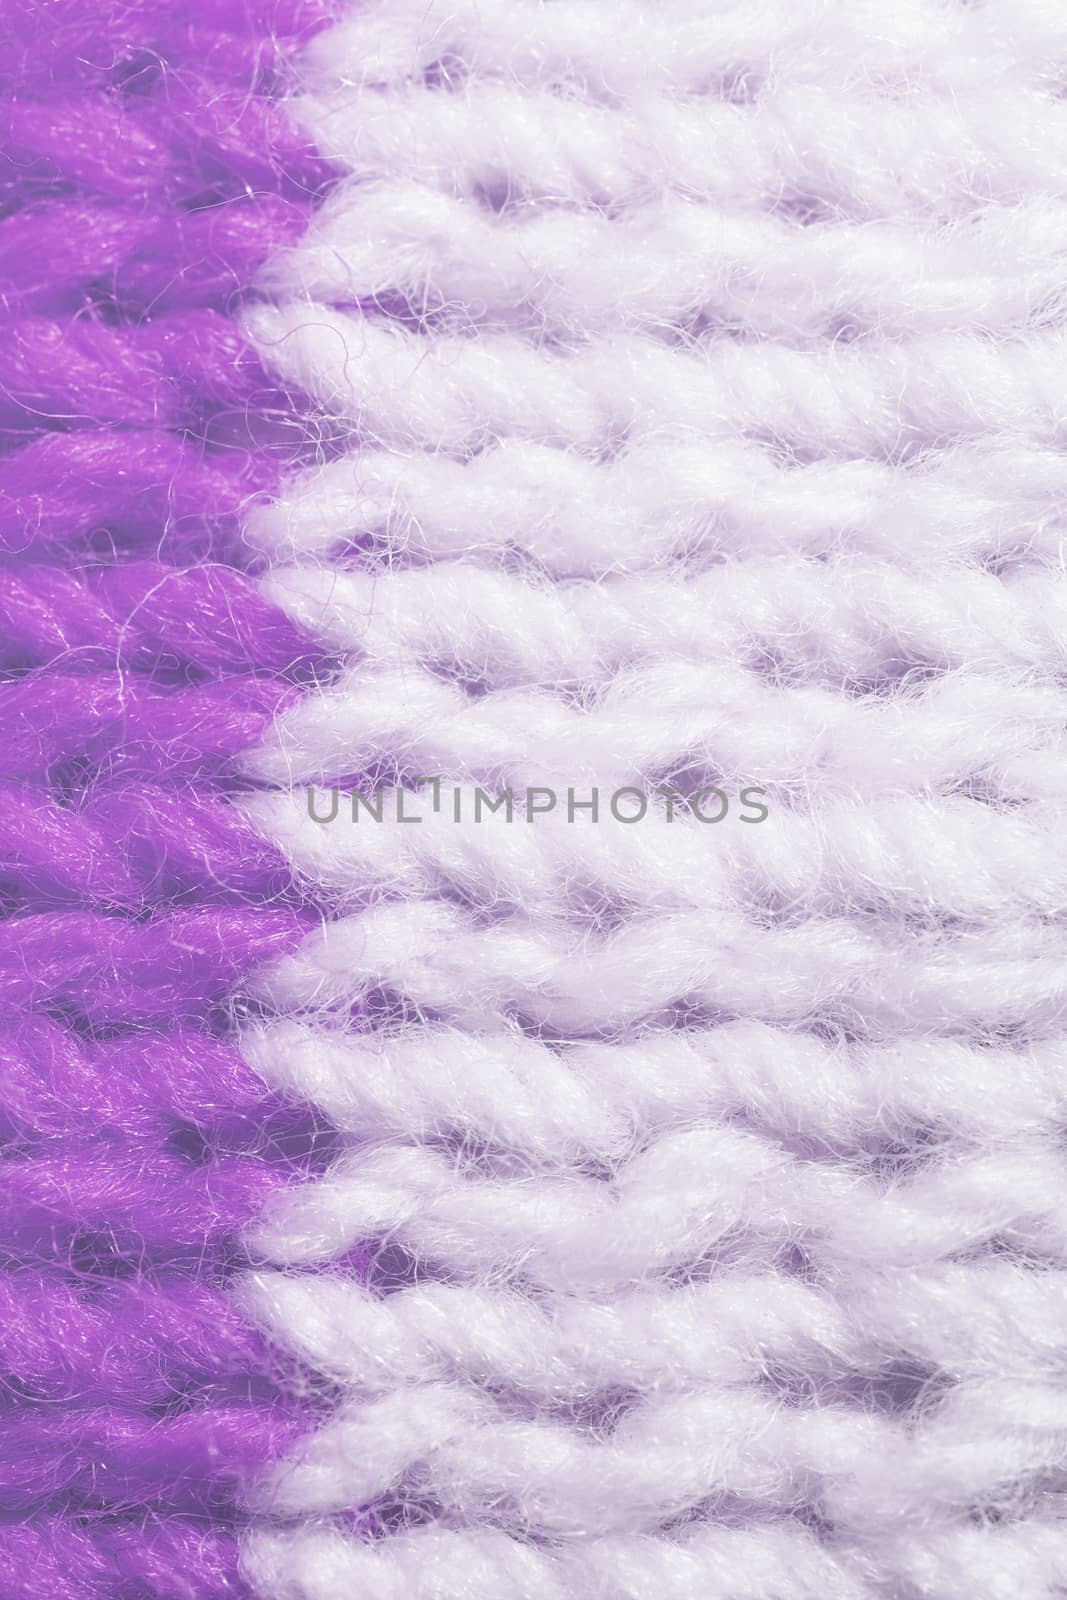 Violet White Wool Knitting Texture. Horizontal Along Weaving Crochet Detailed Rows. Sweater Textile Background. Macro Closeup.